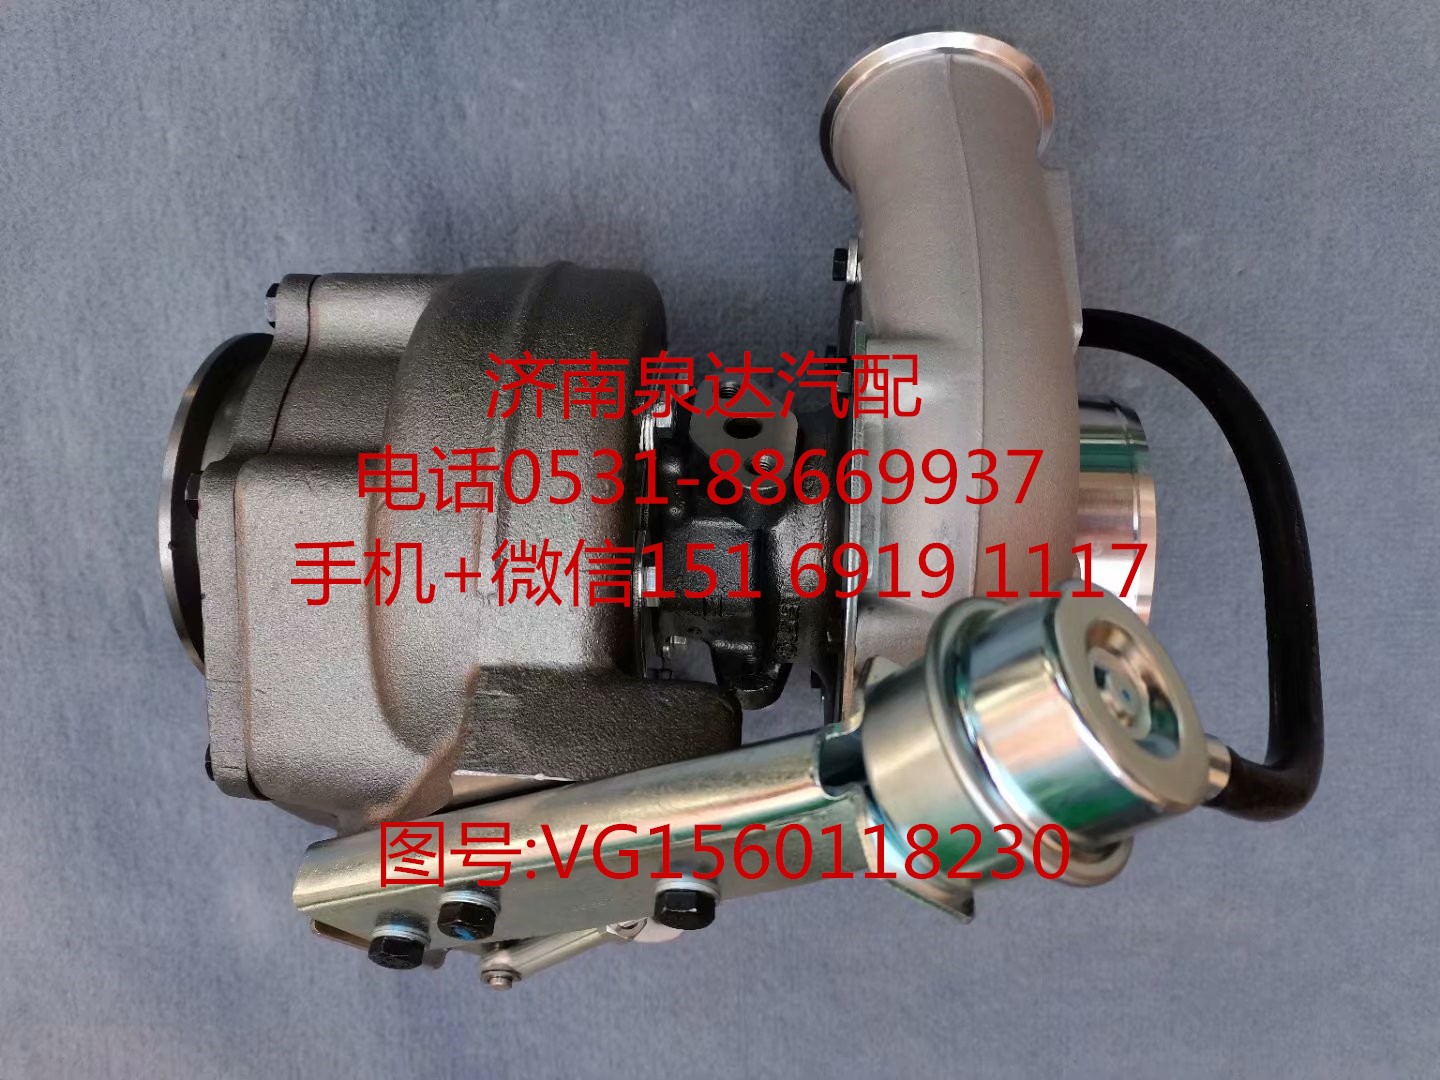 VG1560118230,增压器,济南泉达汽配有限公司